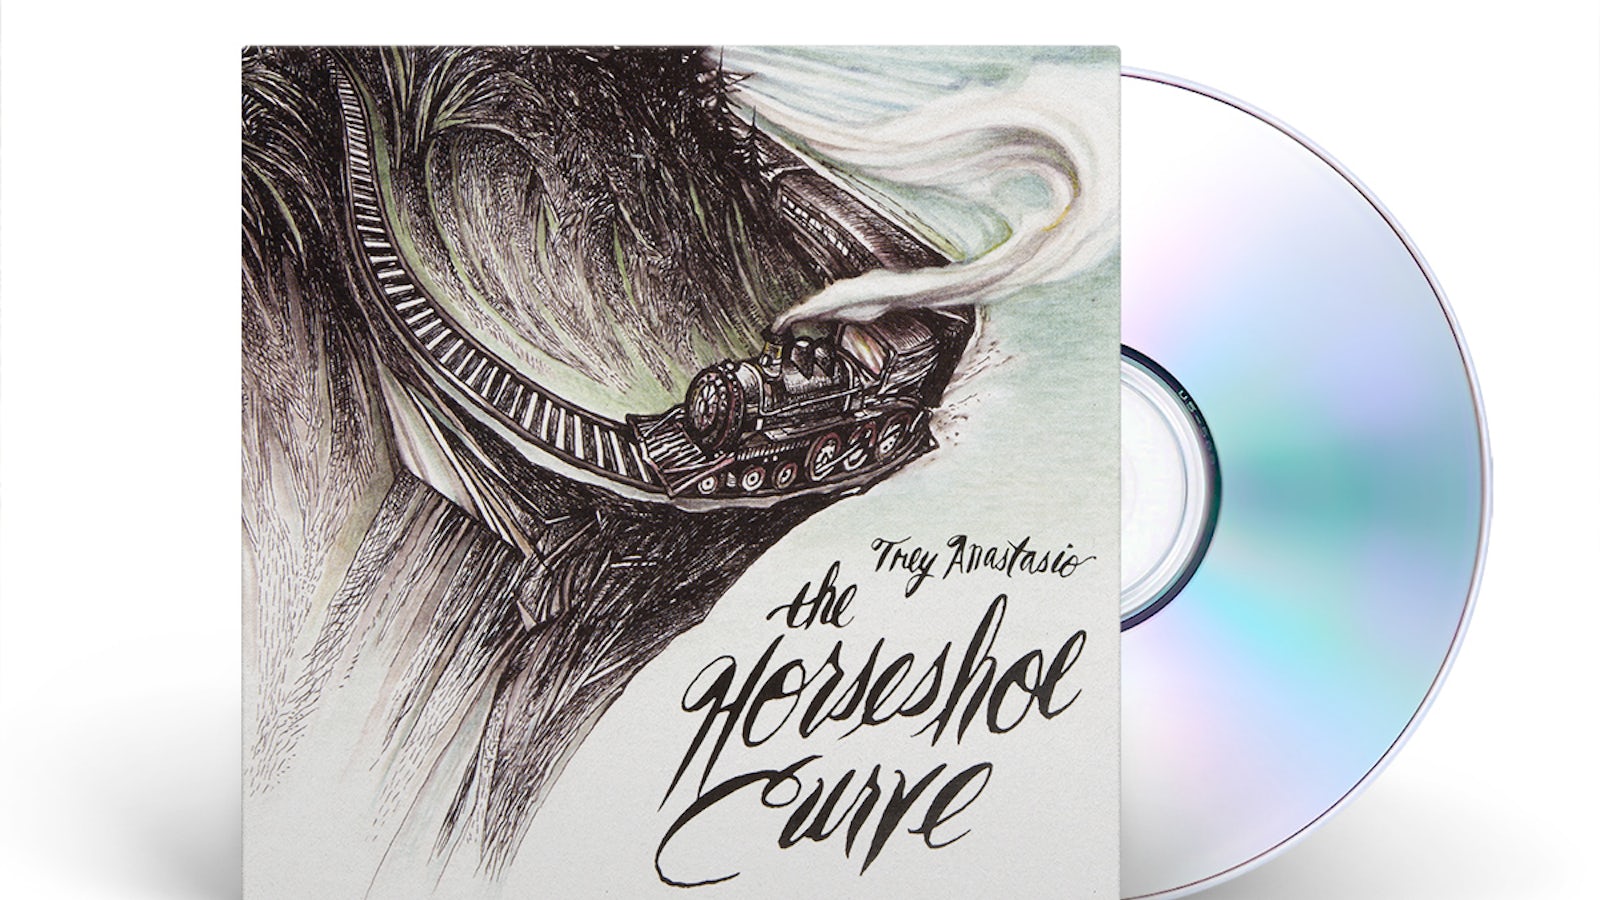 Phish Trey Anastasio - The Horseshoe Curve CD